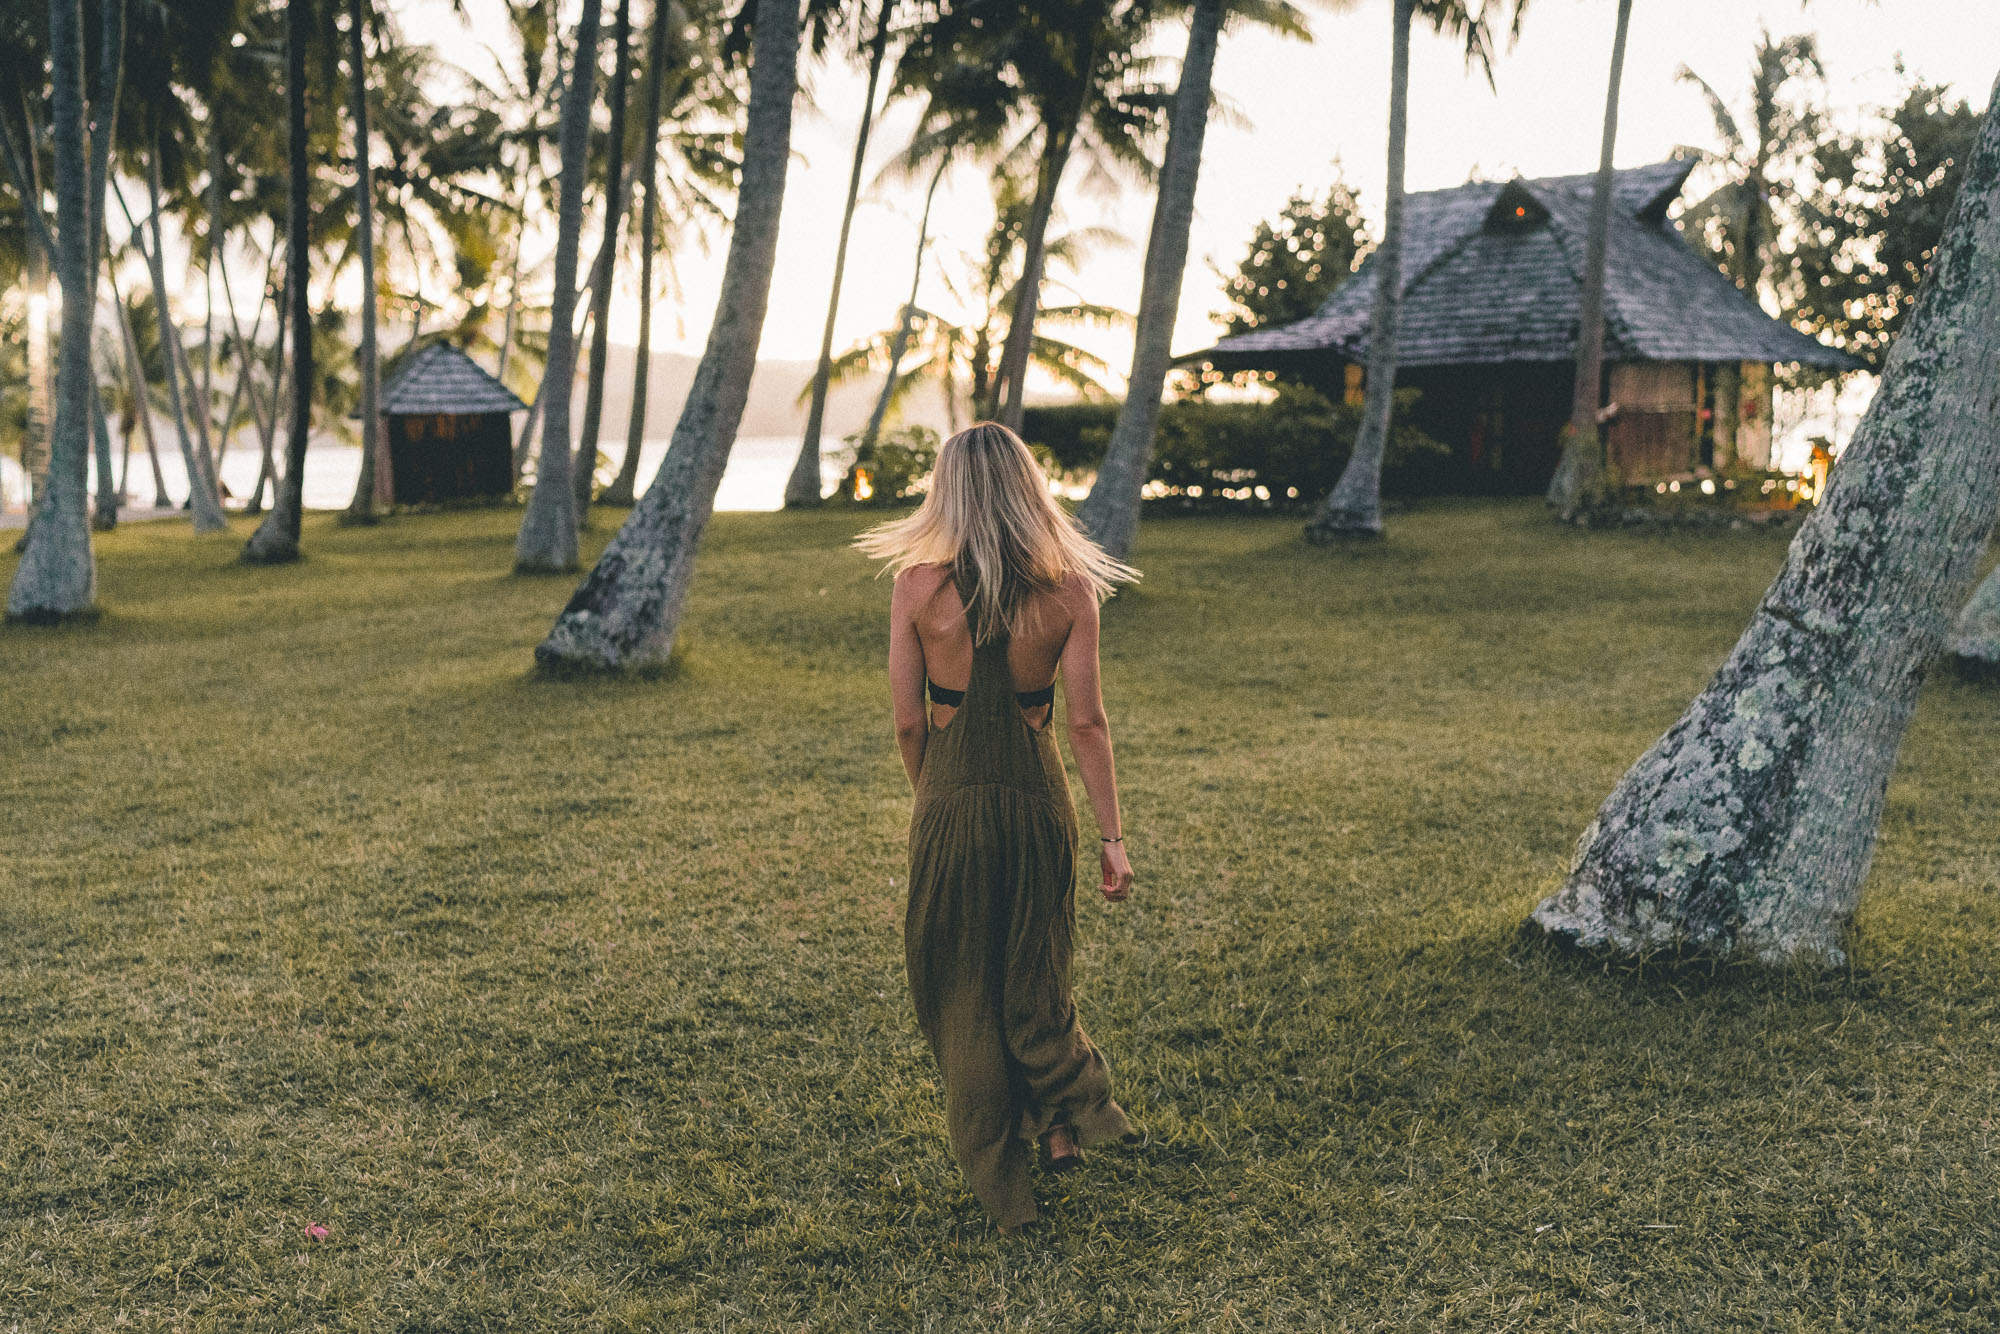 Vahine Island jungle bungalows for our honeymoon in tahiti